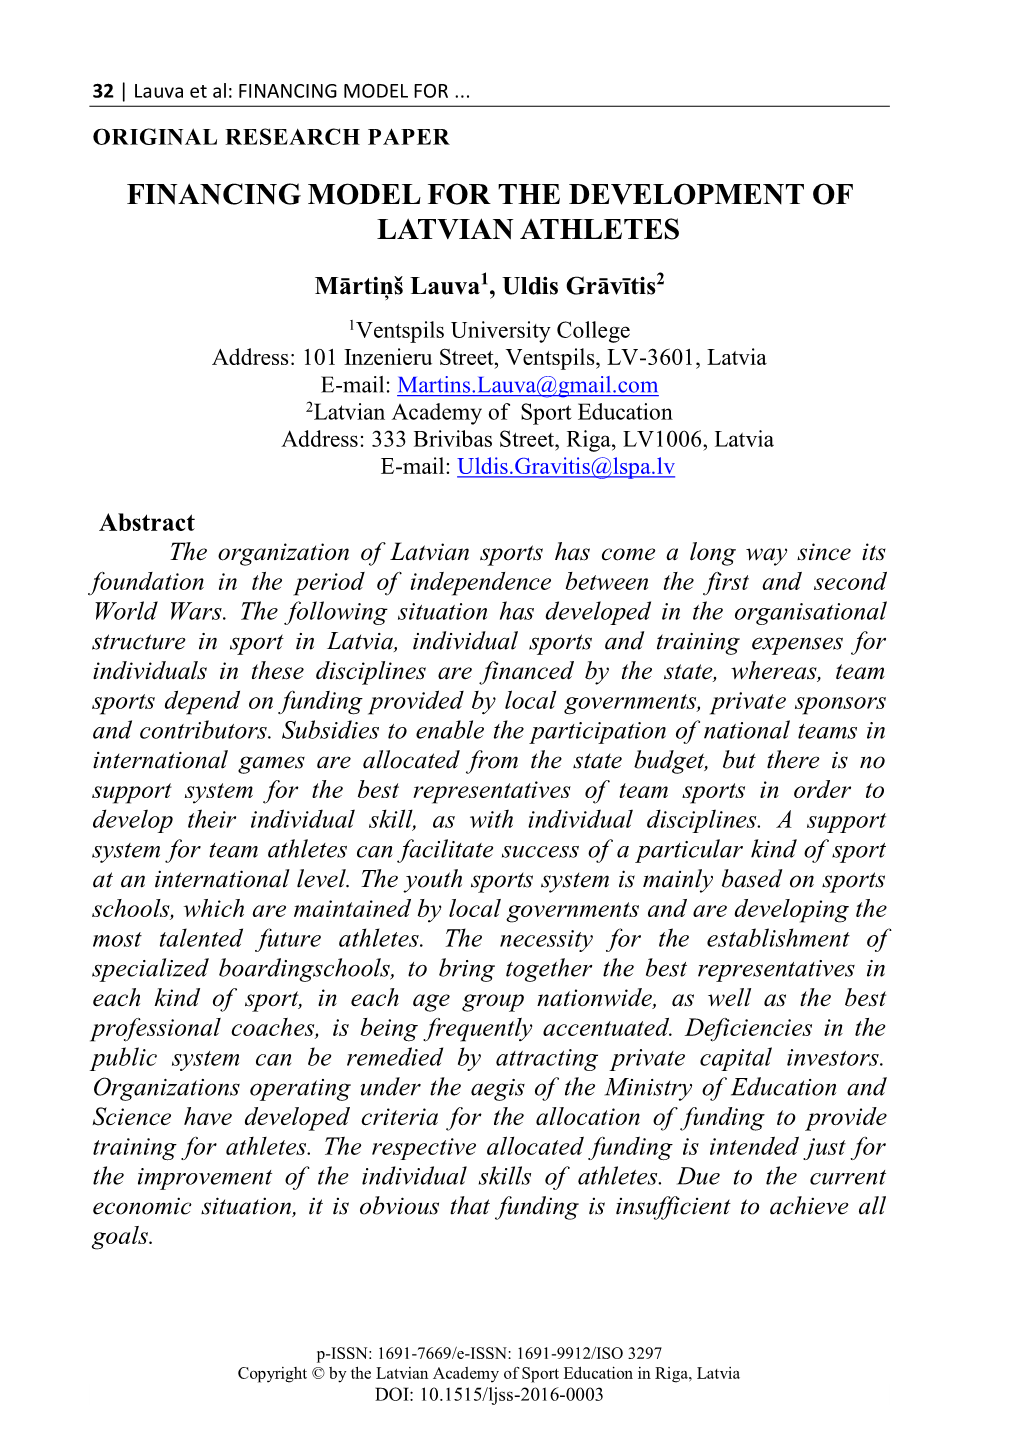 Financing Model for the Development of Latvian Athletes